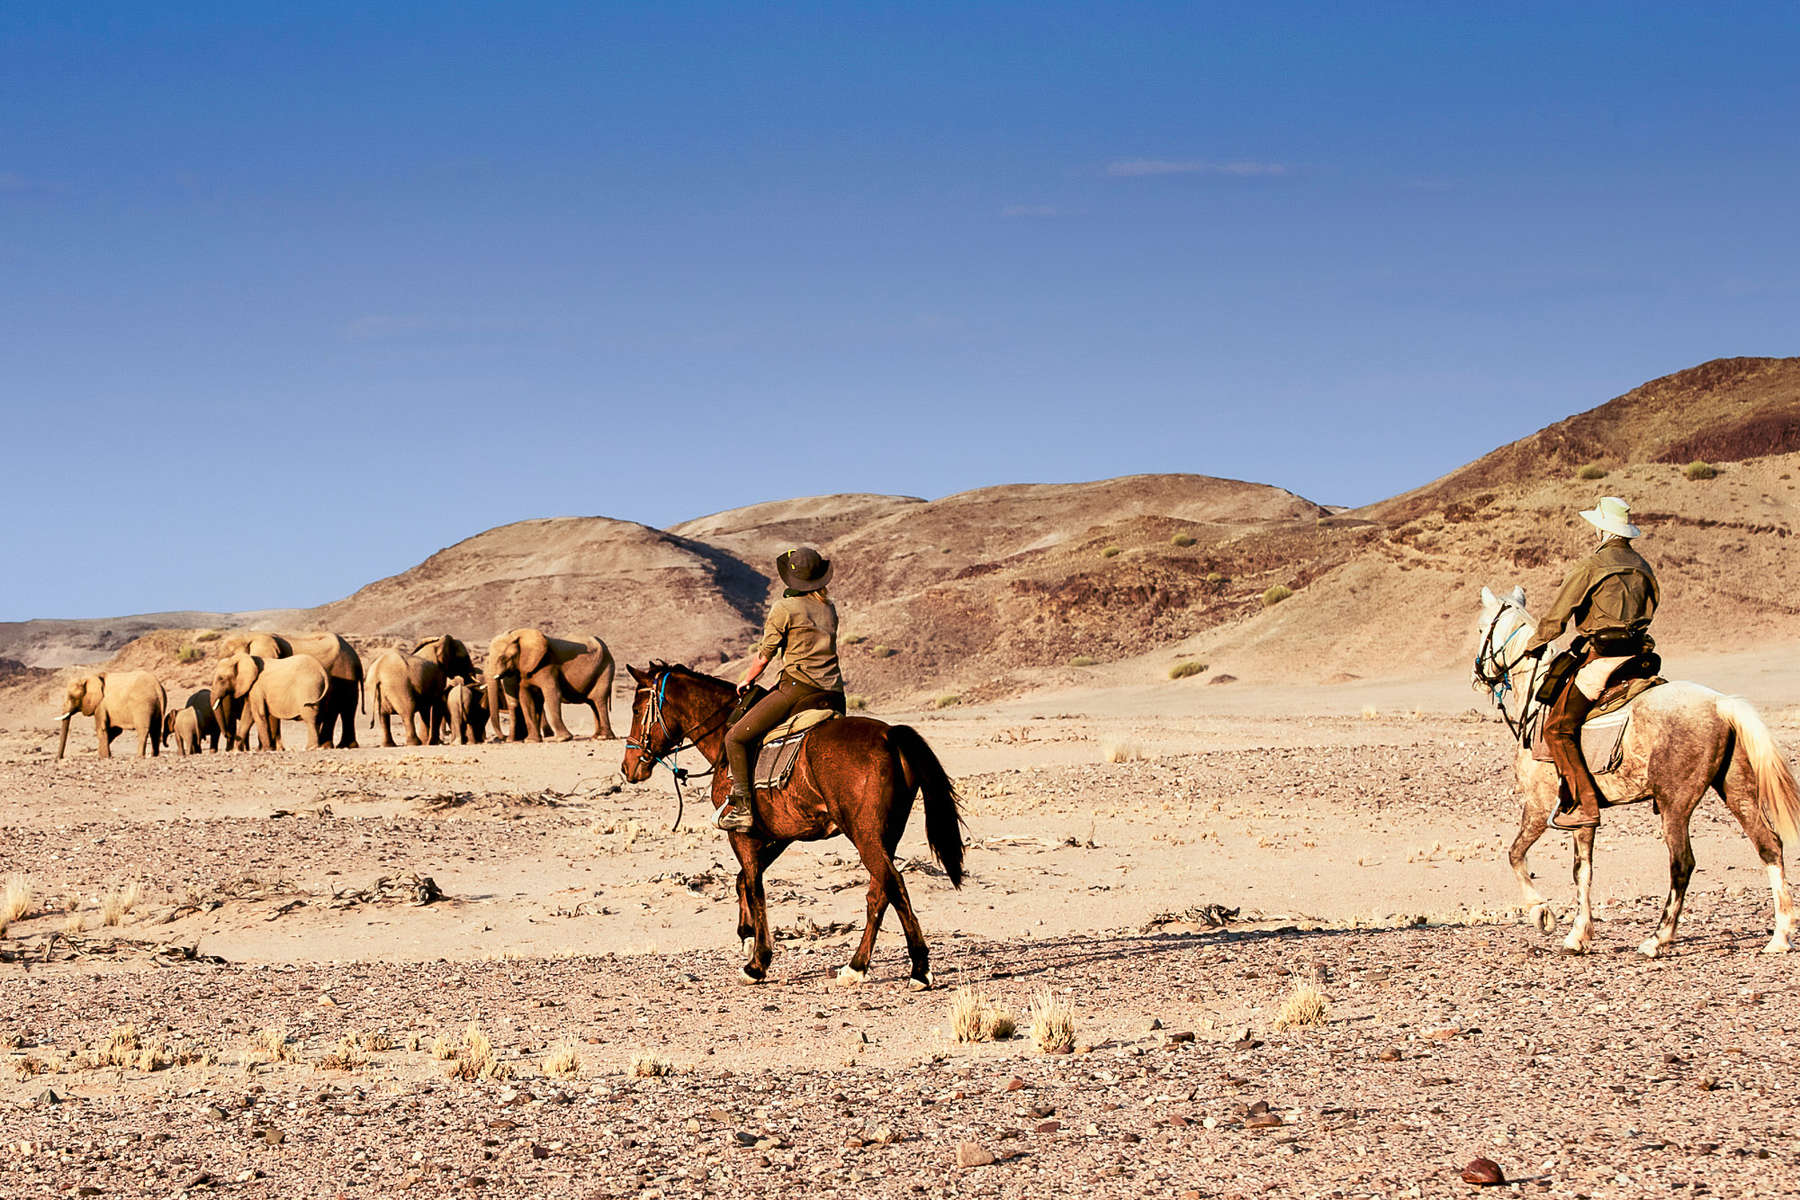 Watching elephants on horseback on a riding safari in Namibia, Damaraland